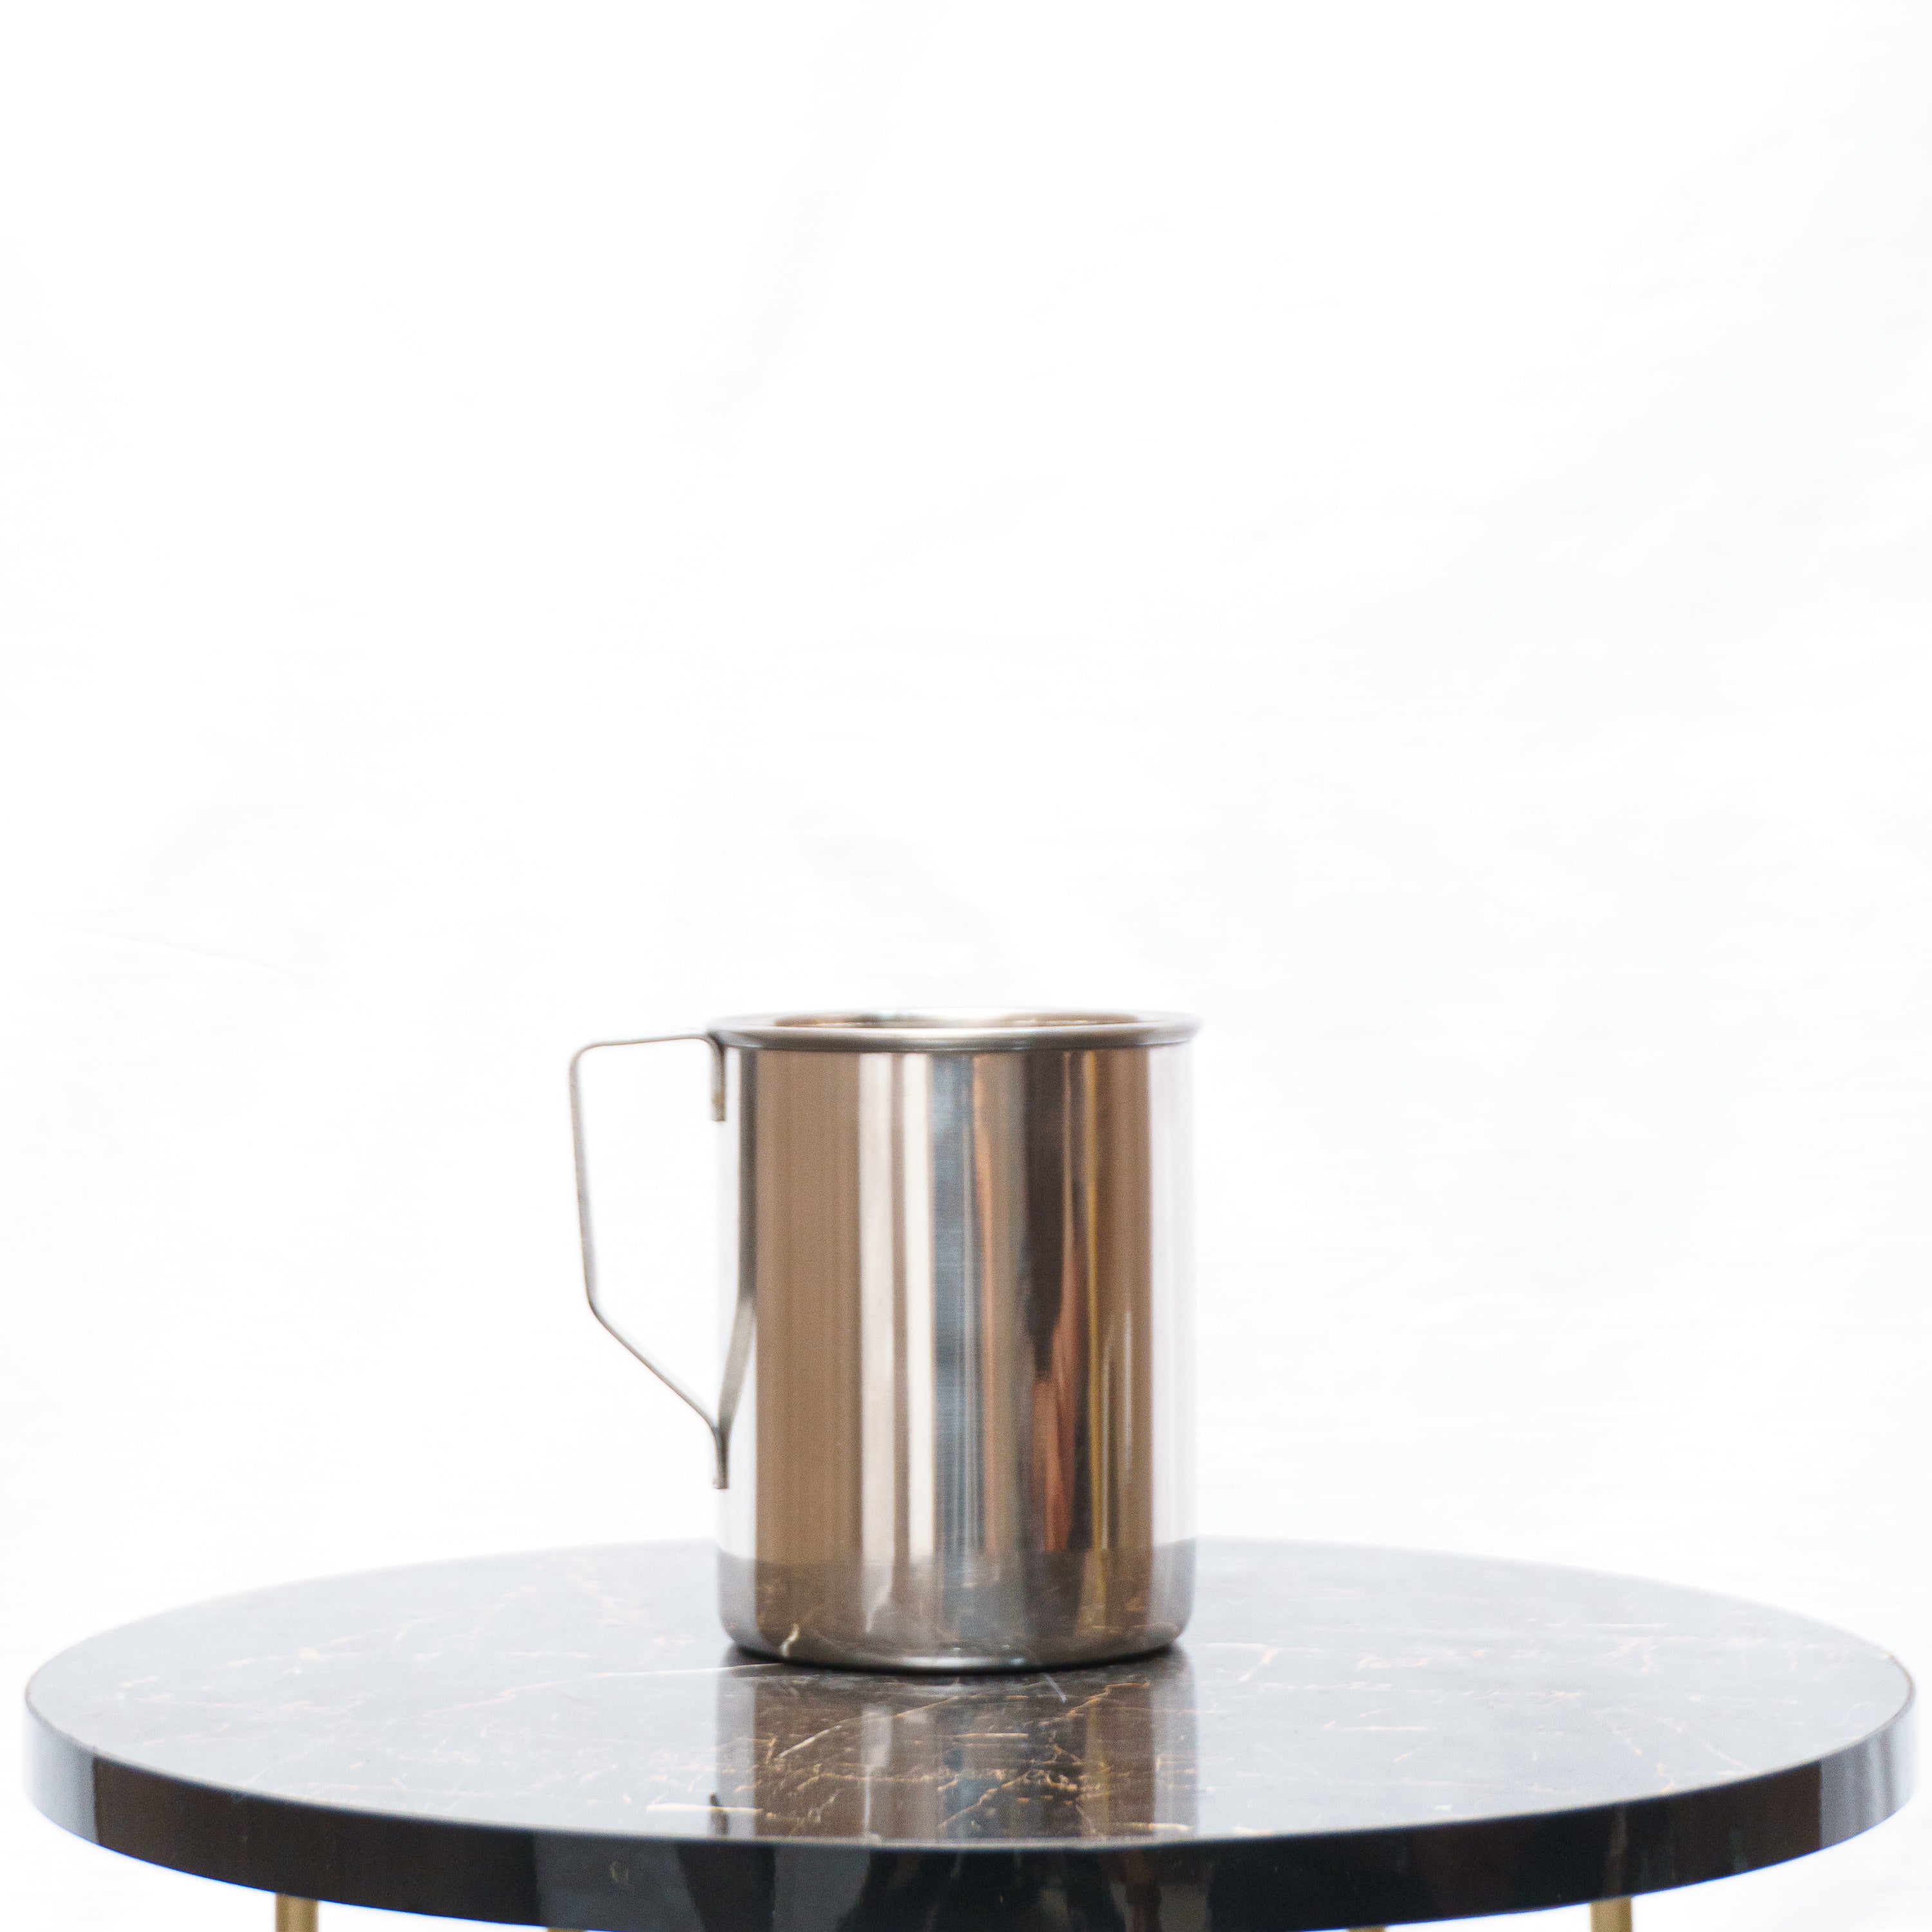 Stainless Steel Mug with Metal Handle: Durability Meets Elegance